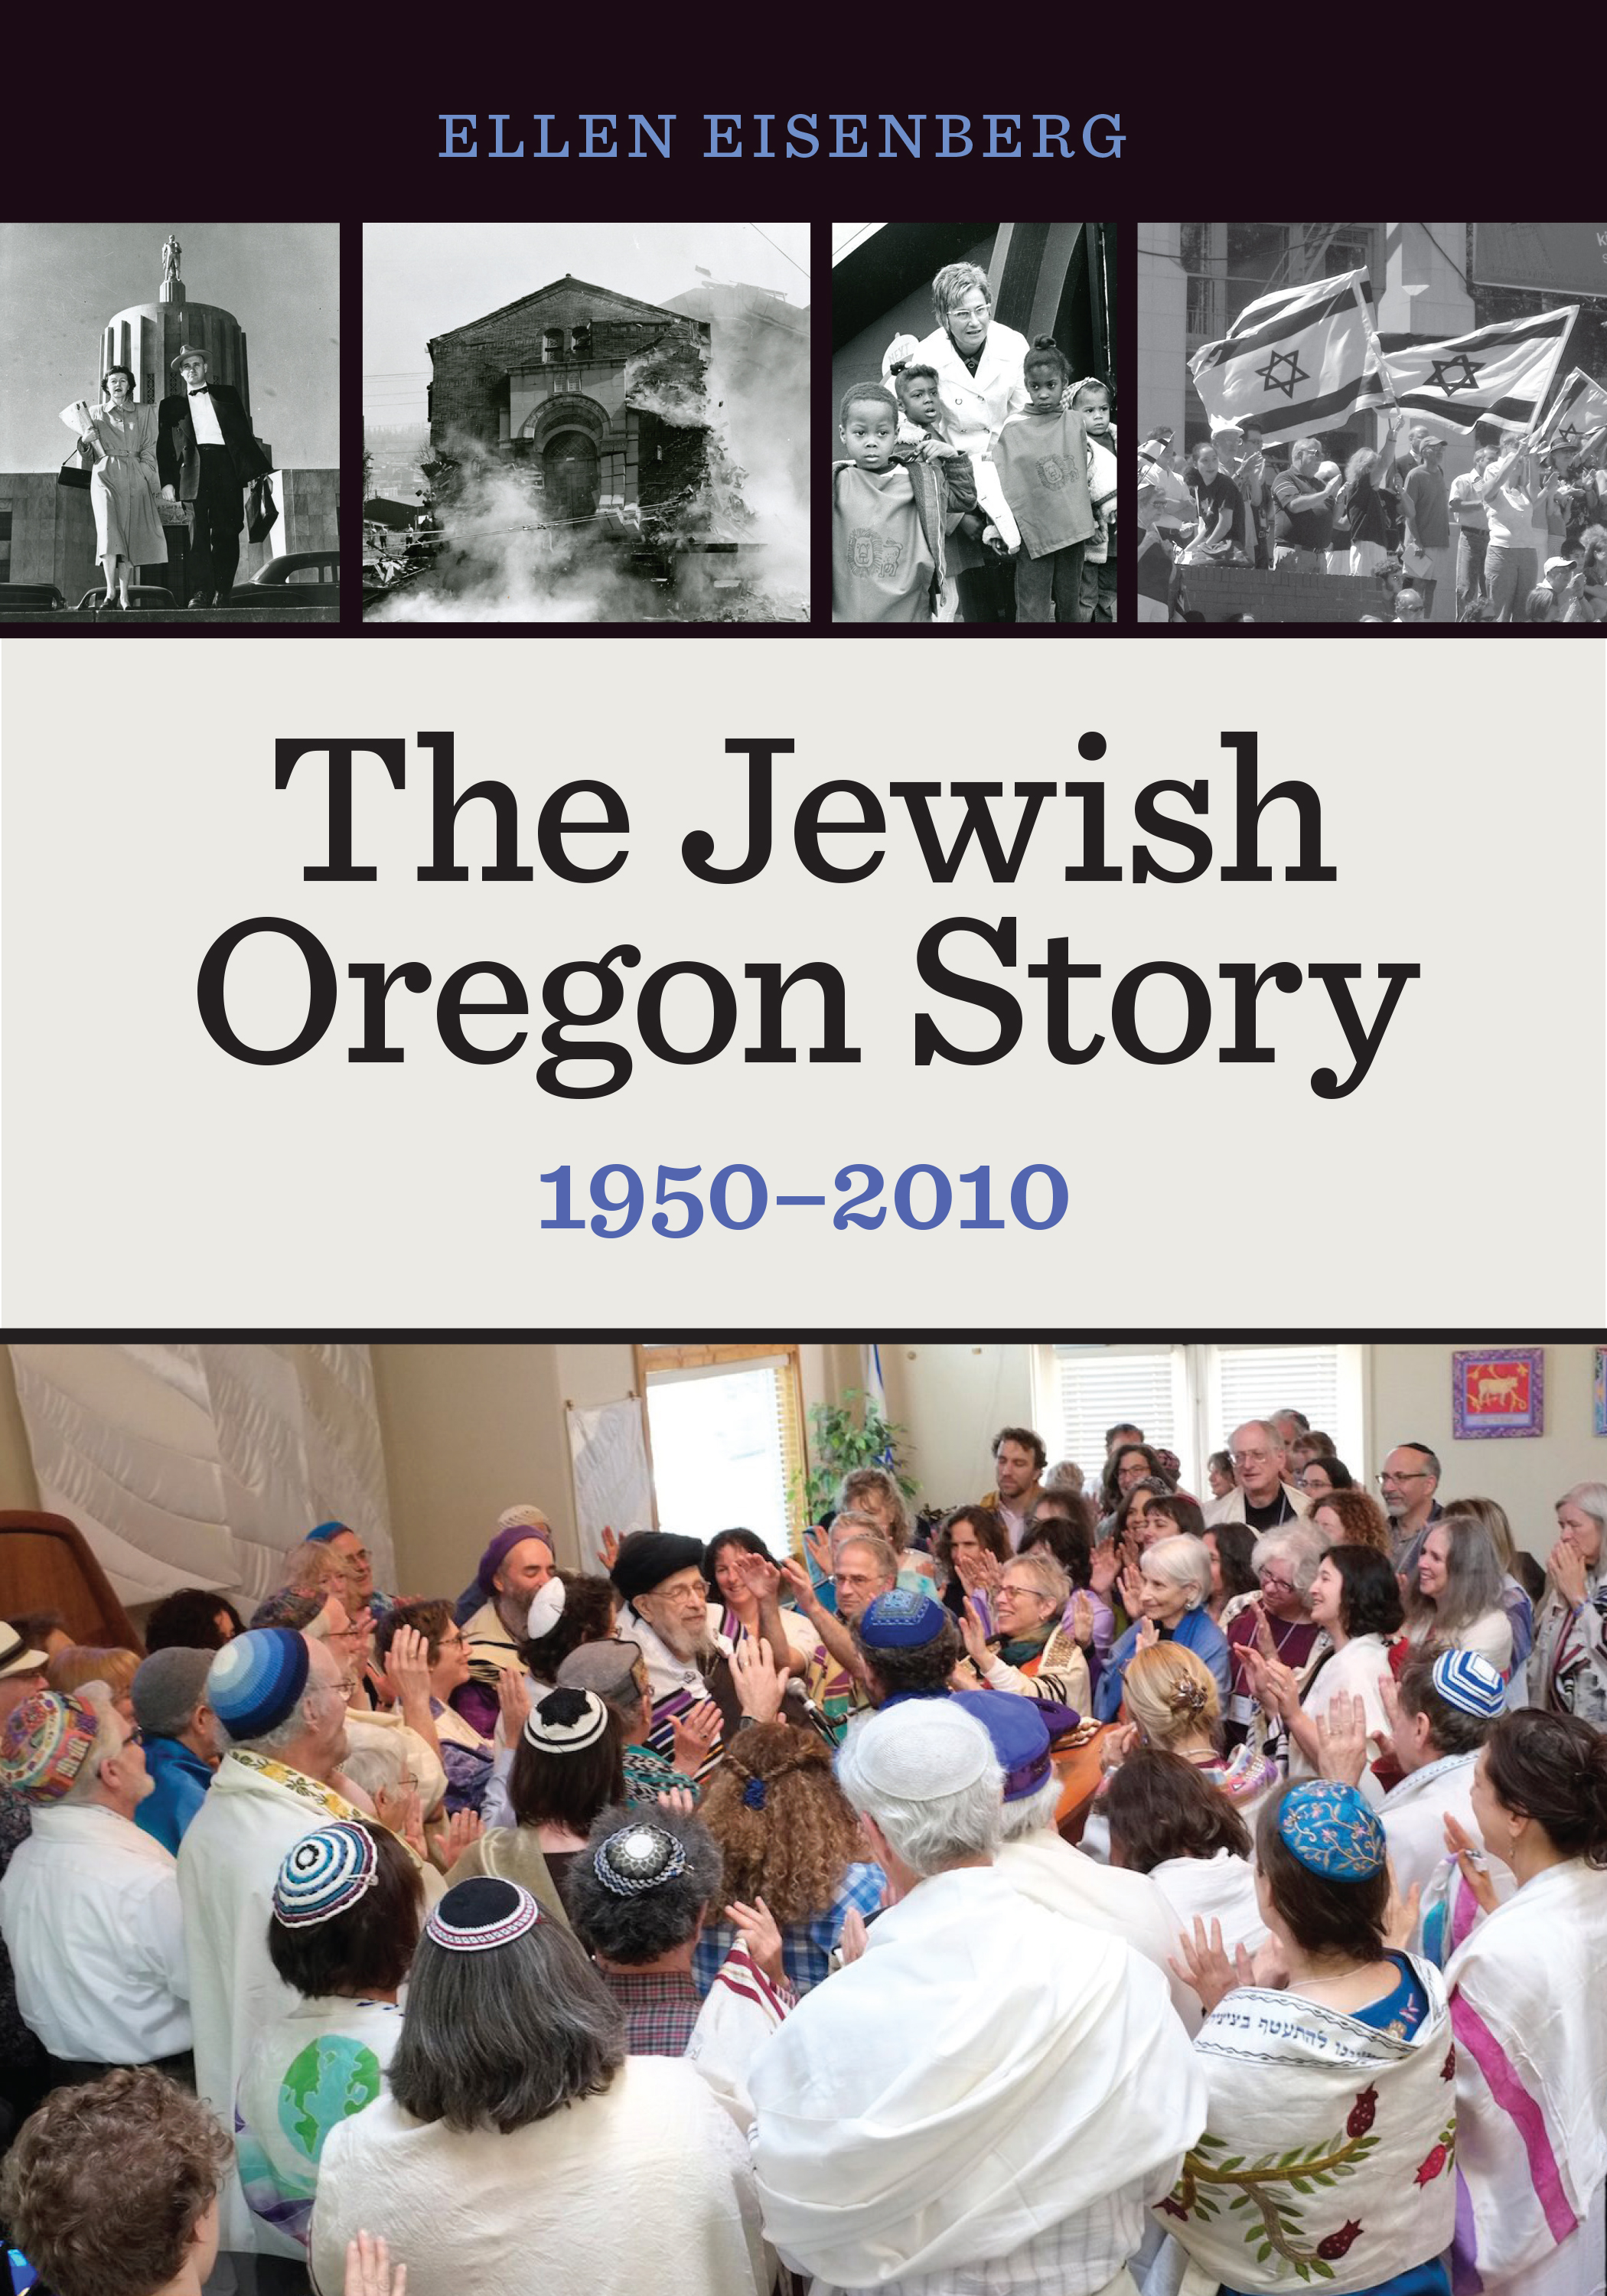 The Jewish Oregon Story: 1950-2010